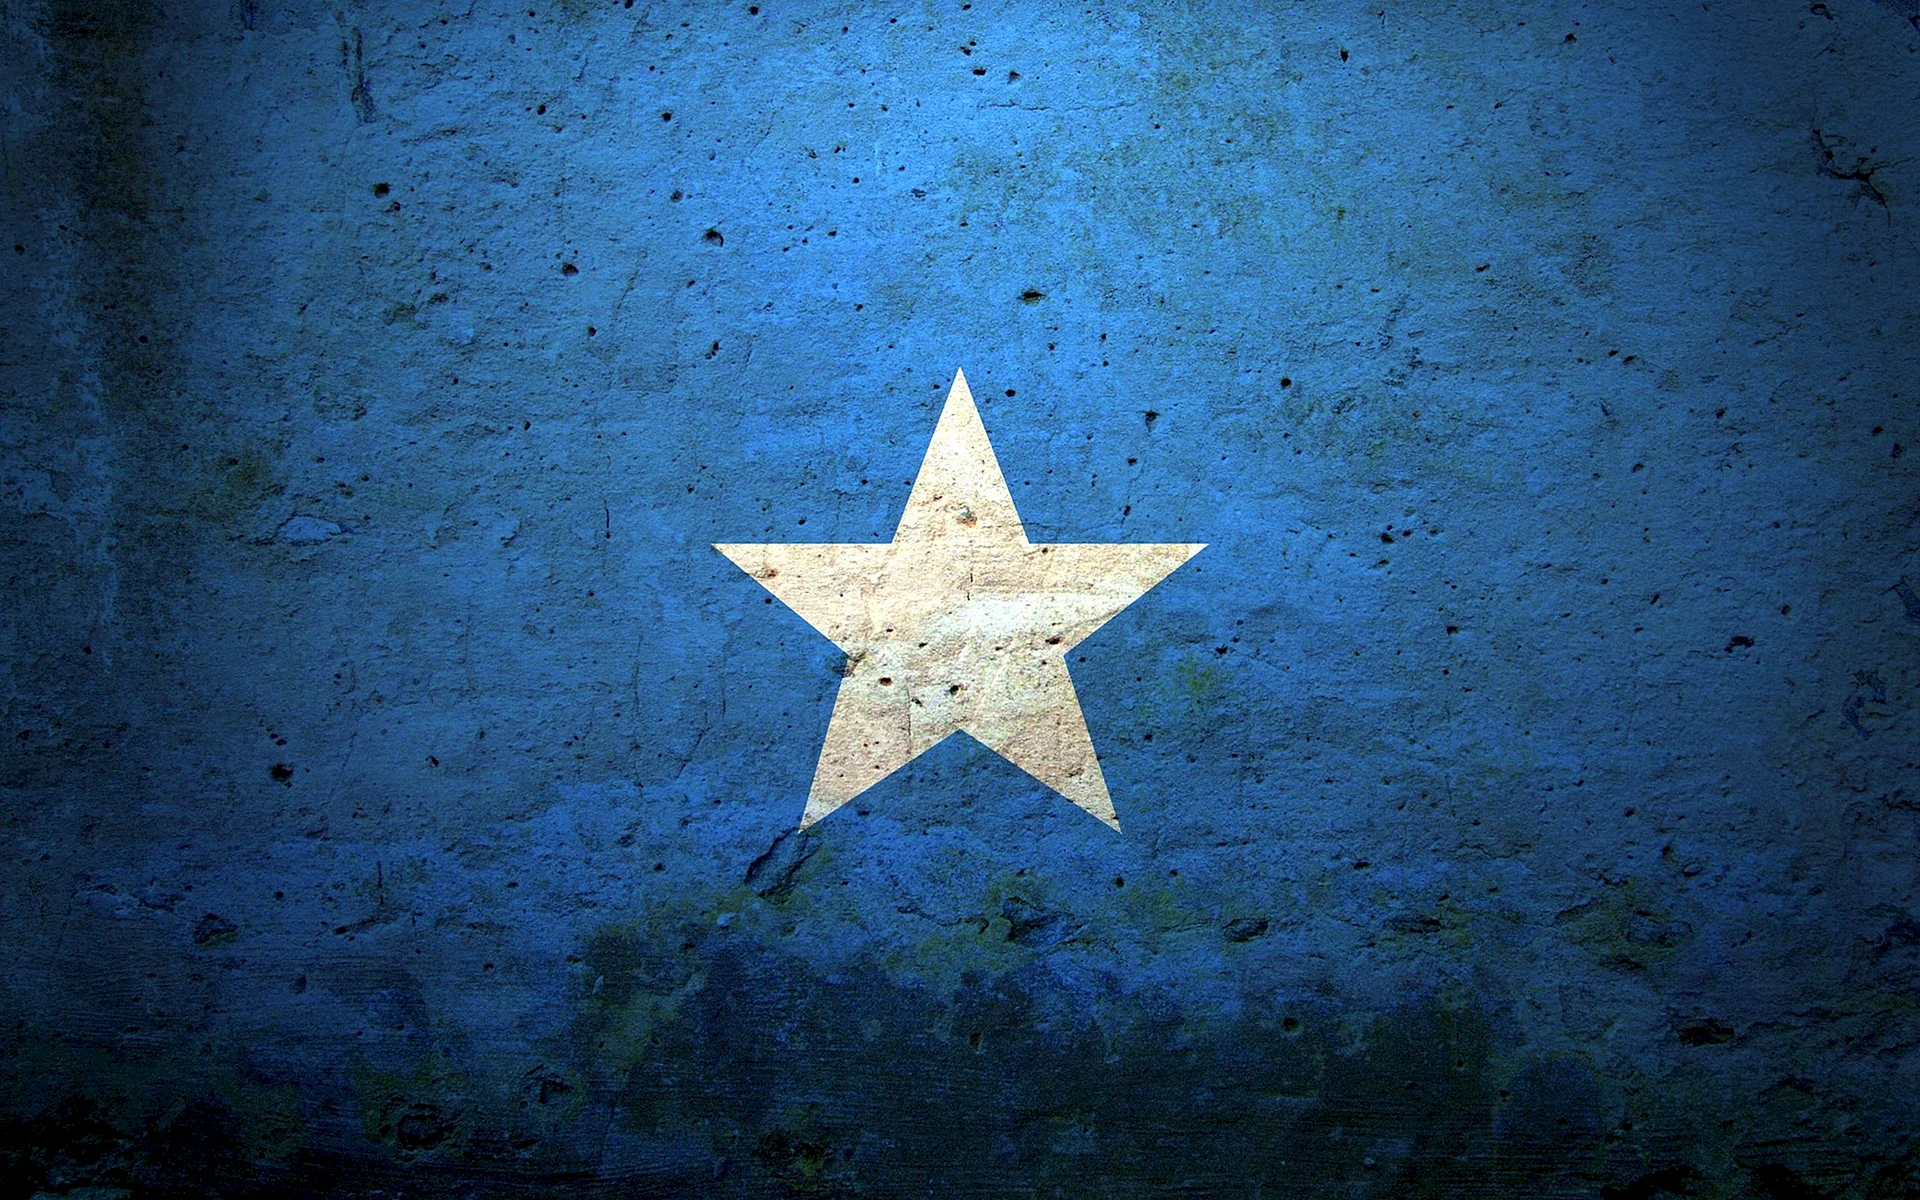 Somalia Flag Wallpaper